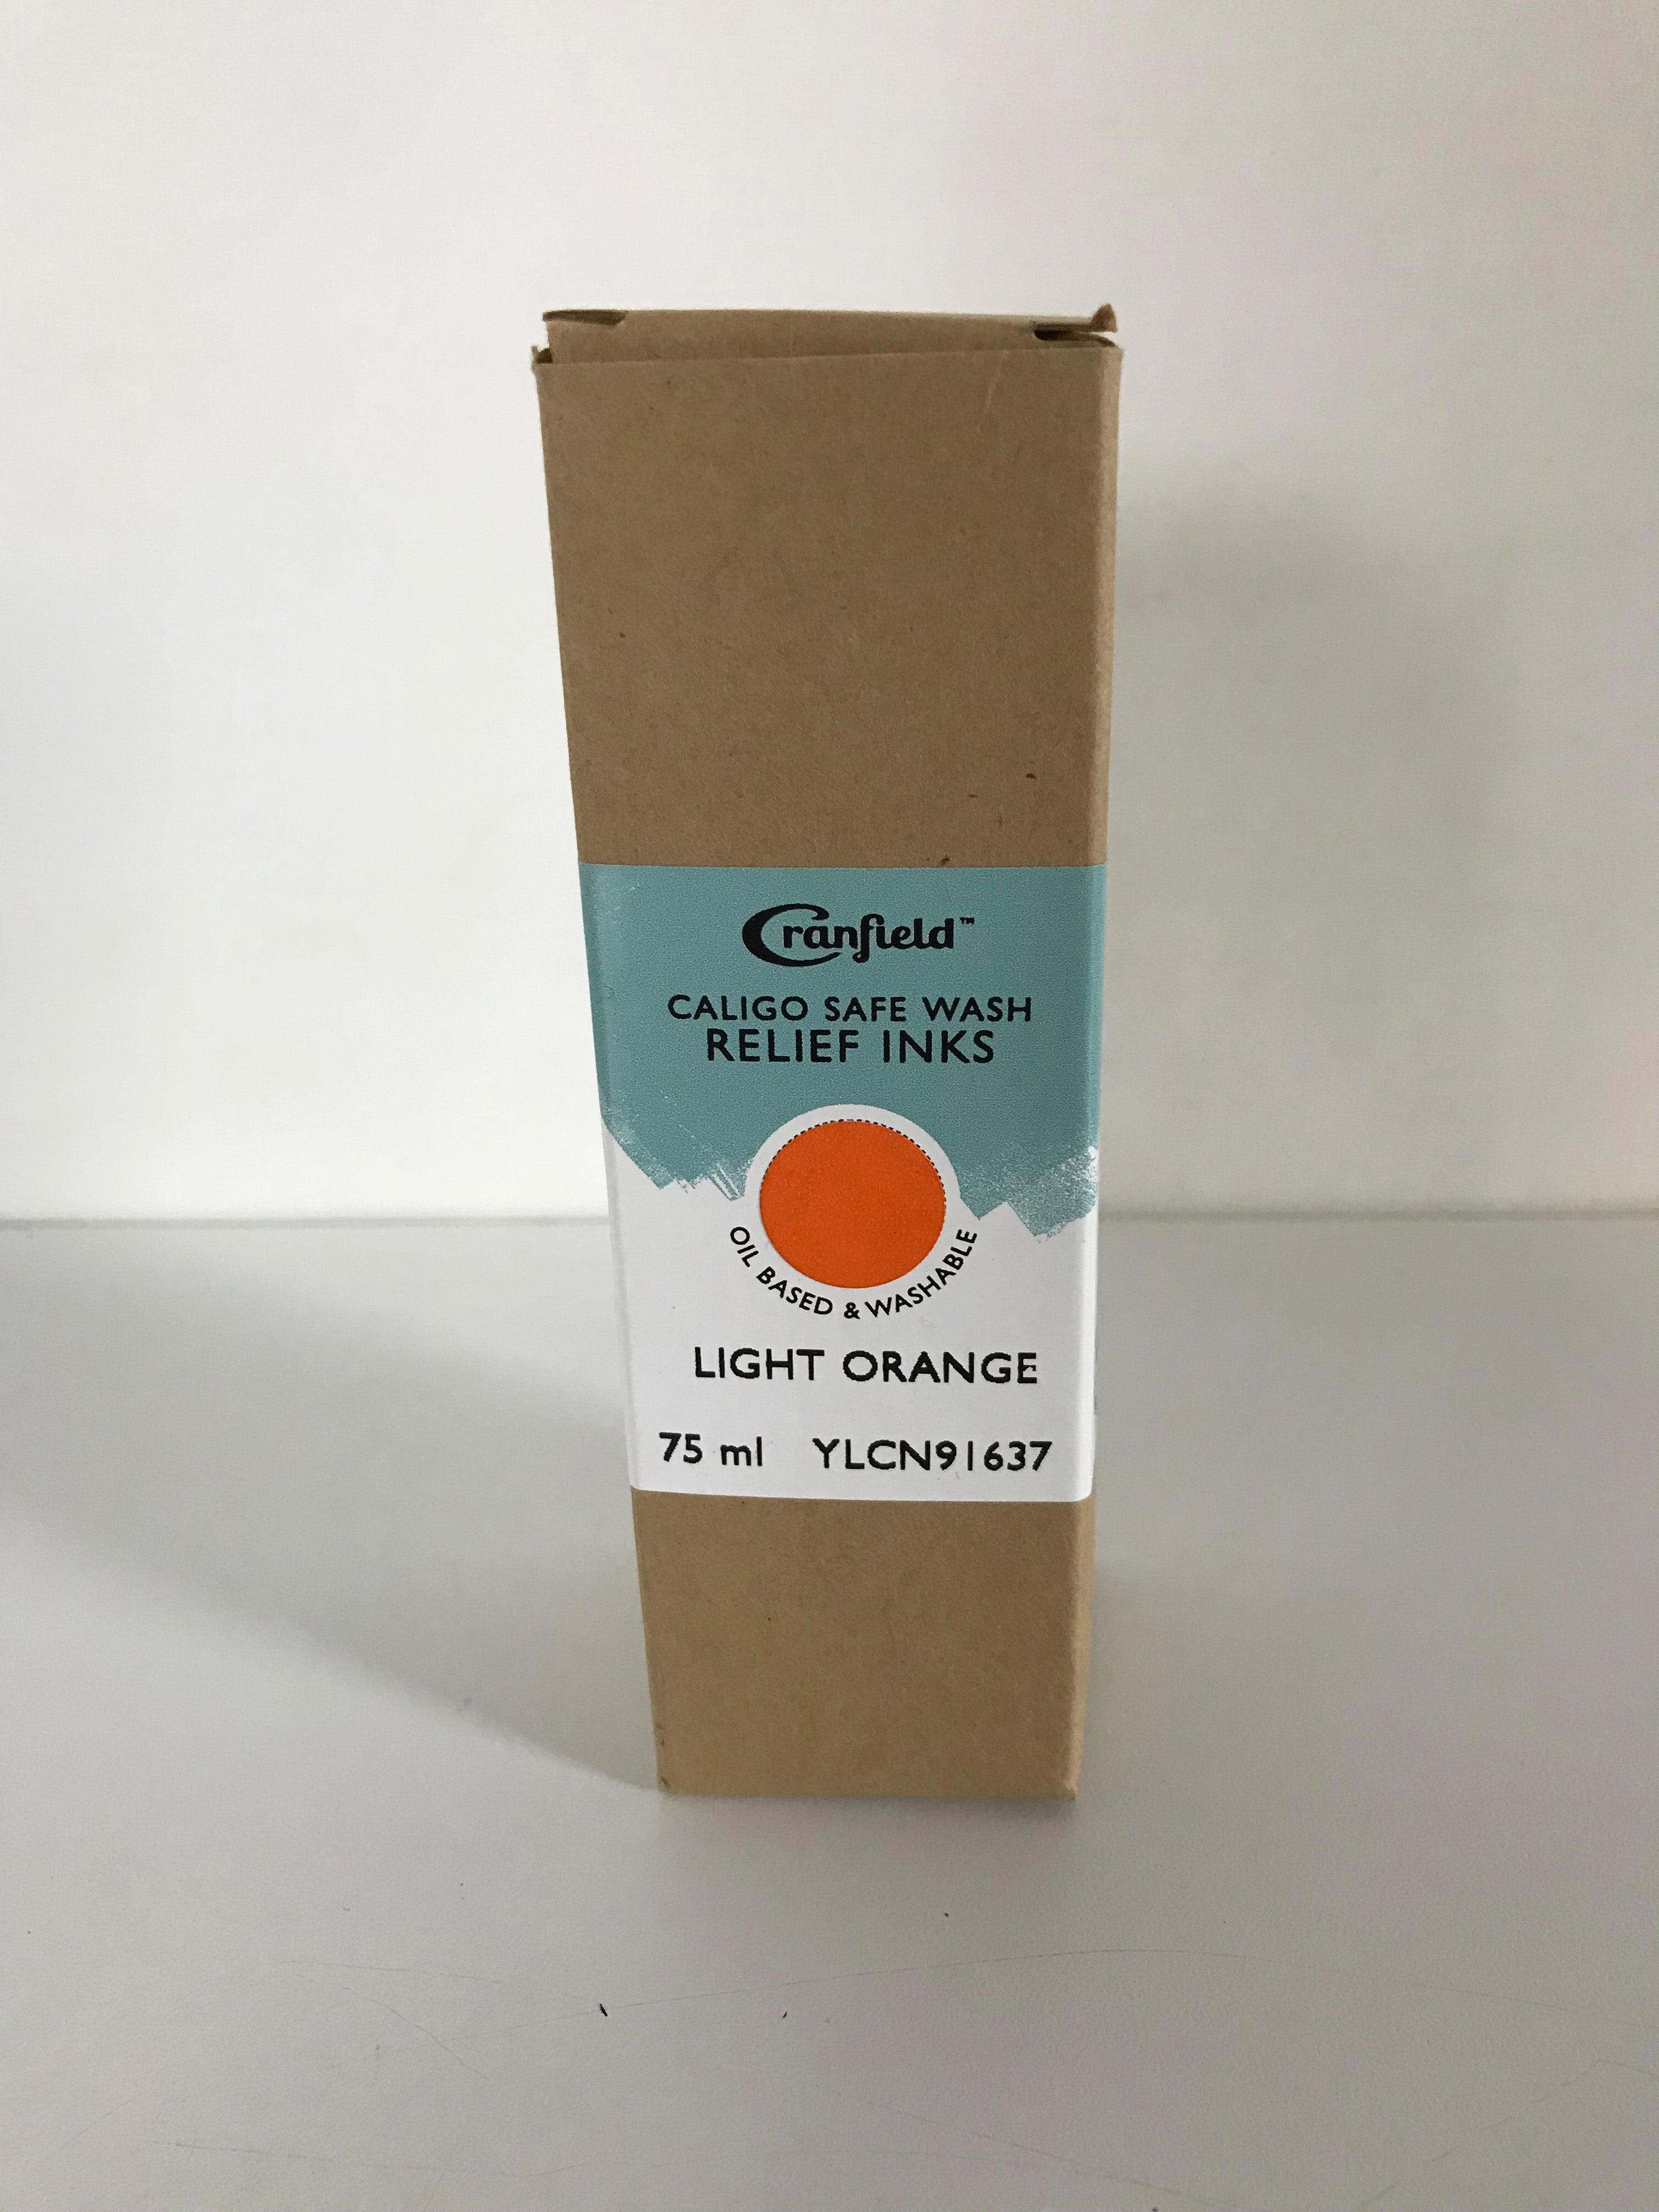 Cranfield Light Orange Caligo Safe Wash Relief Inks